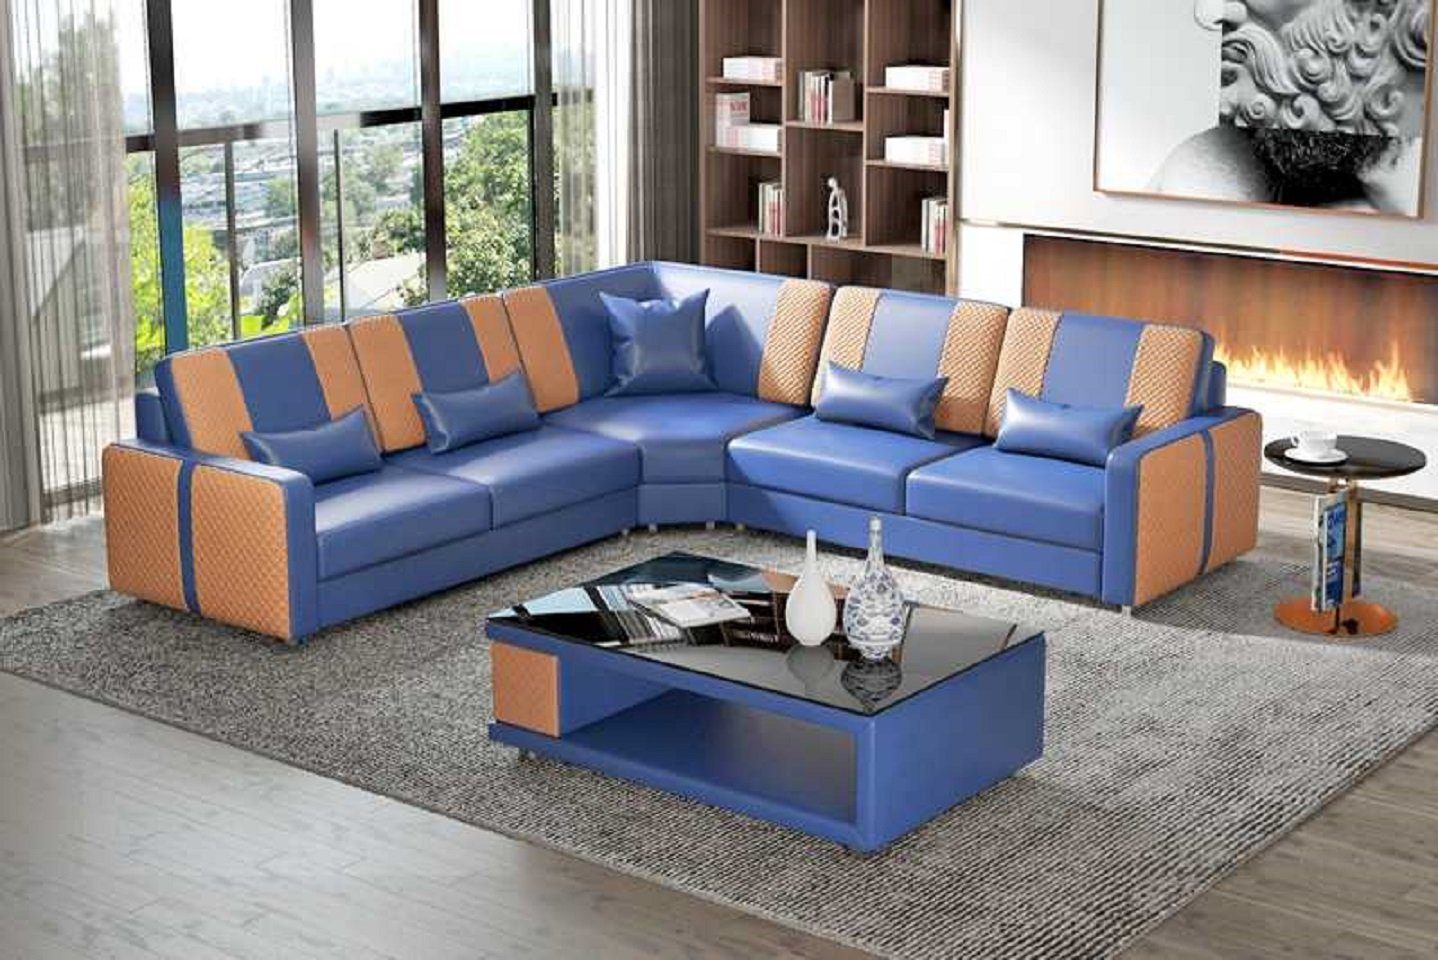 L Modern 3 JVmoebel Europe Teile, Made Form Sofa in Eckcouch, Design Ecksofa Eckgarnitur Couch Ecksofa Blau